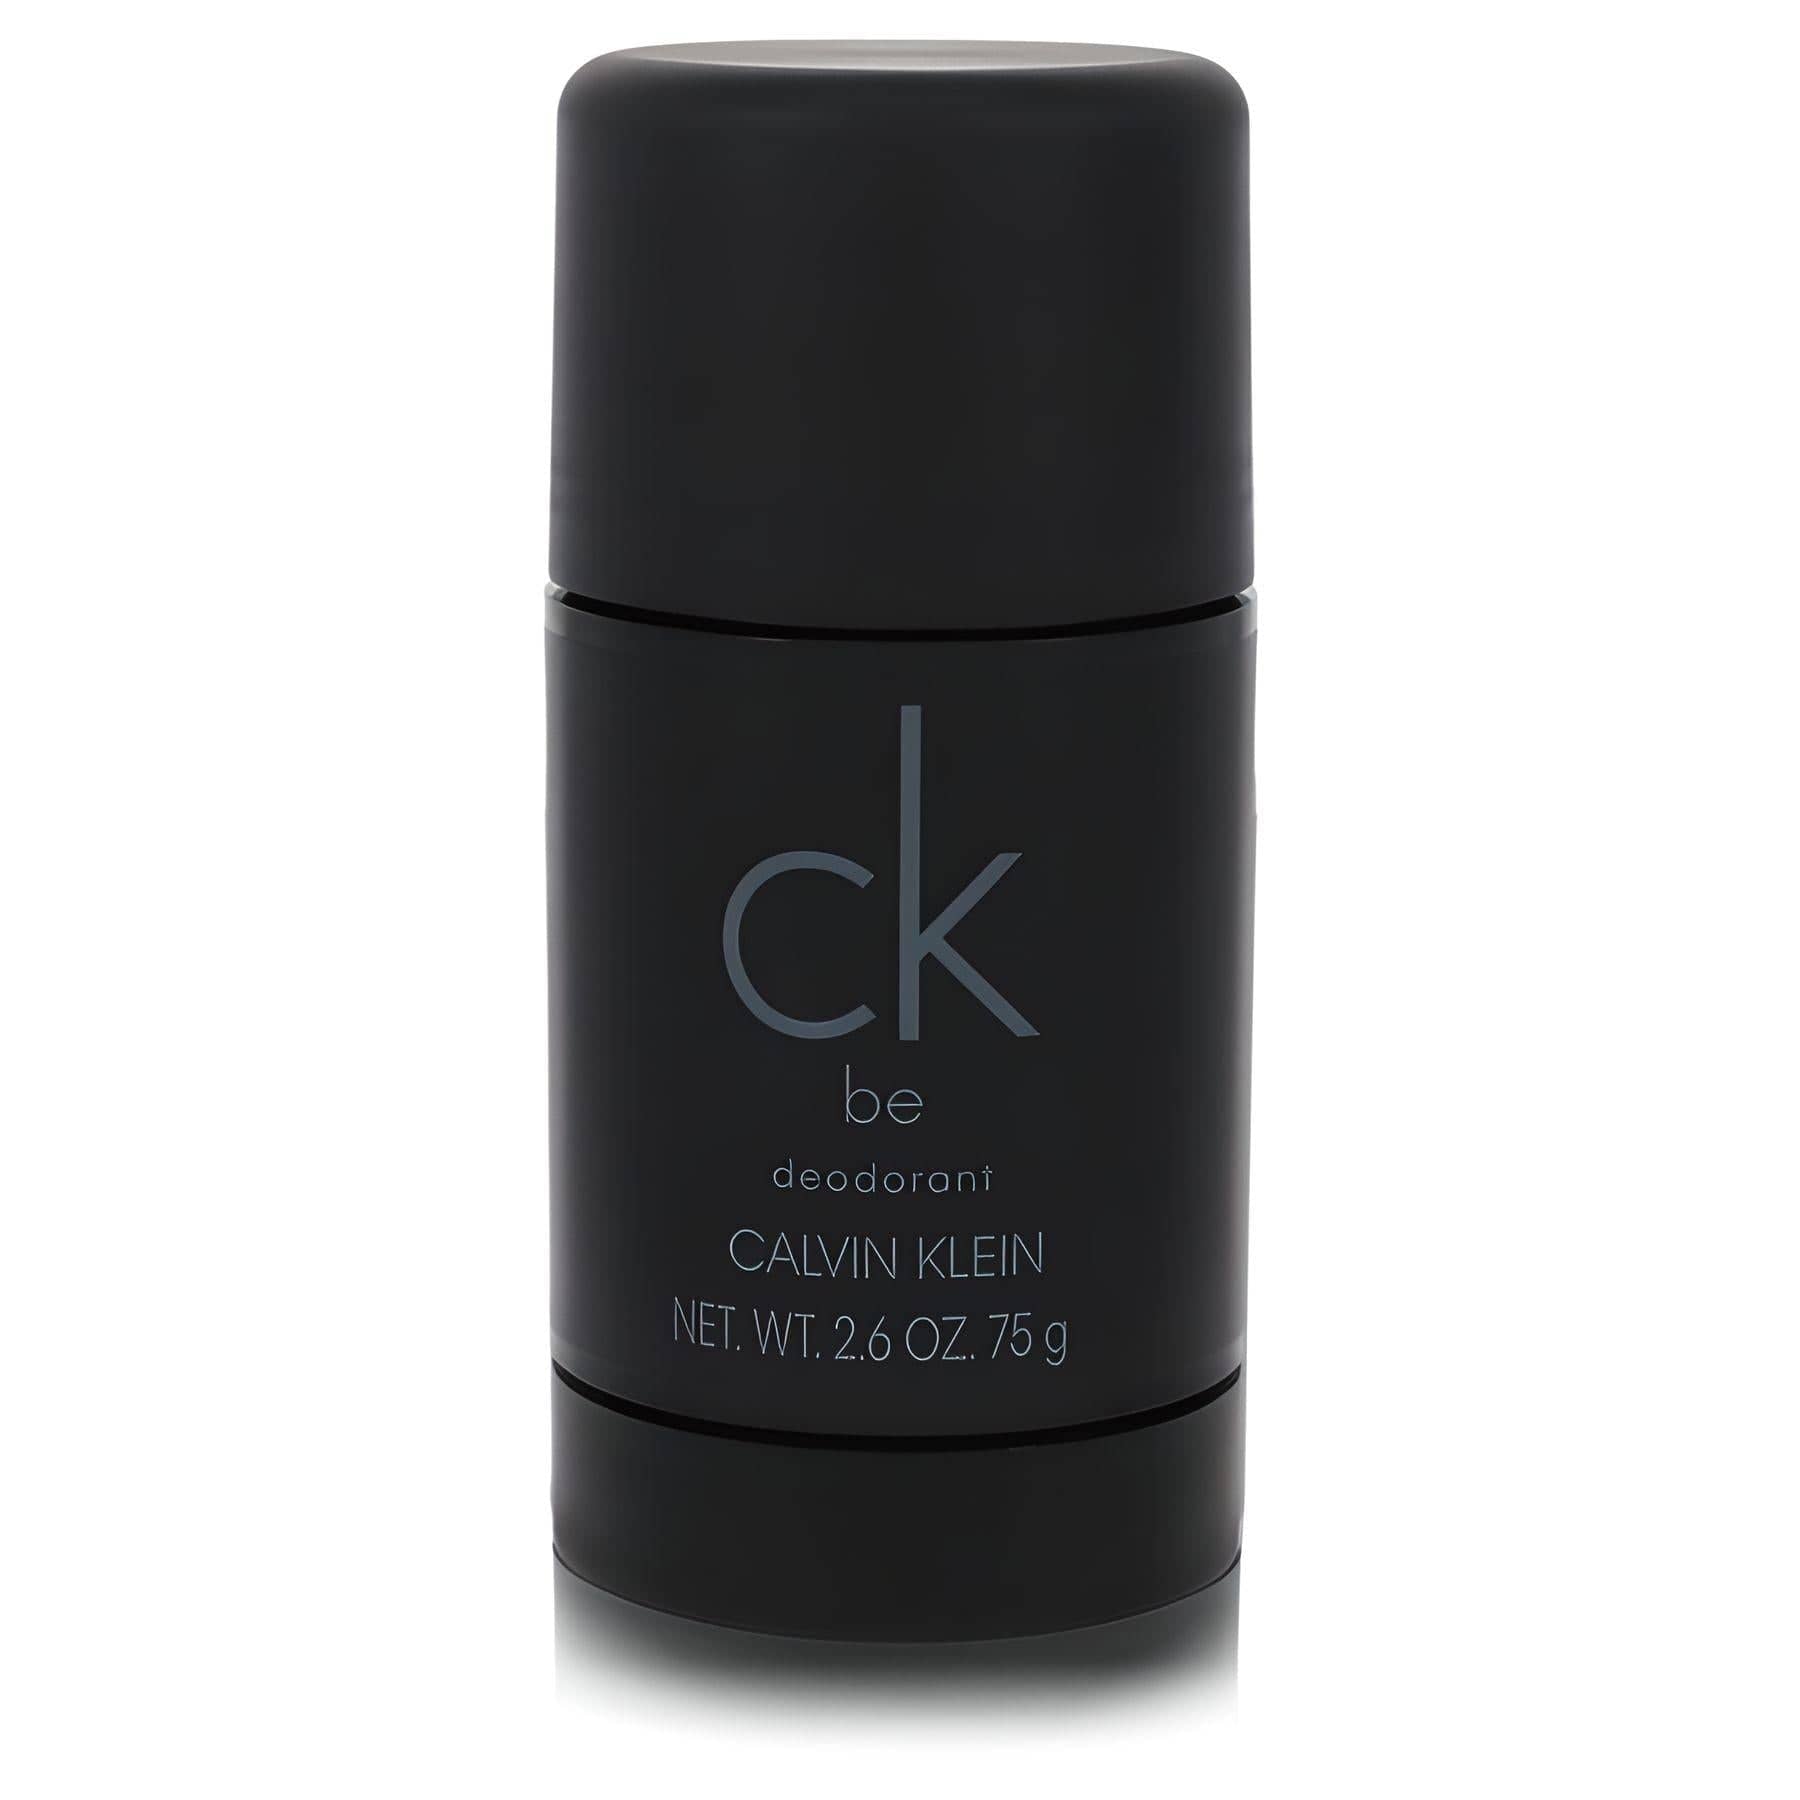 CK BE Deodorant Stick